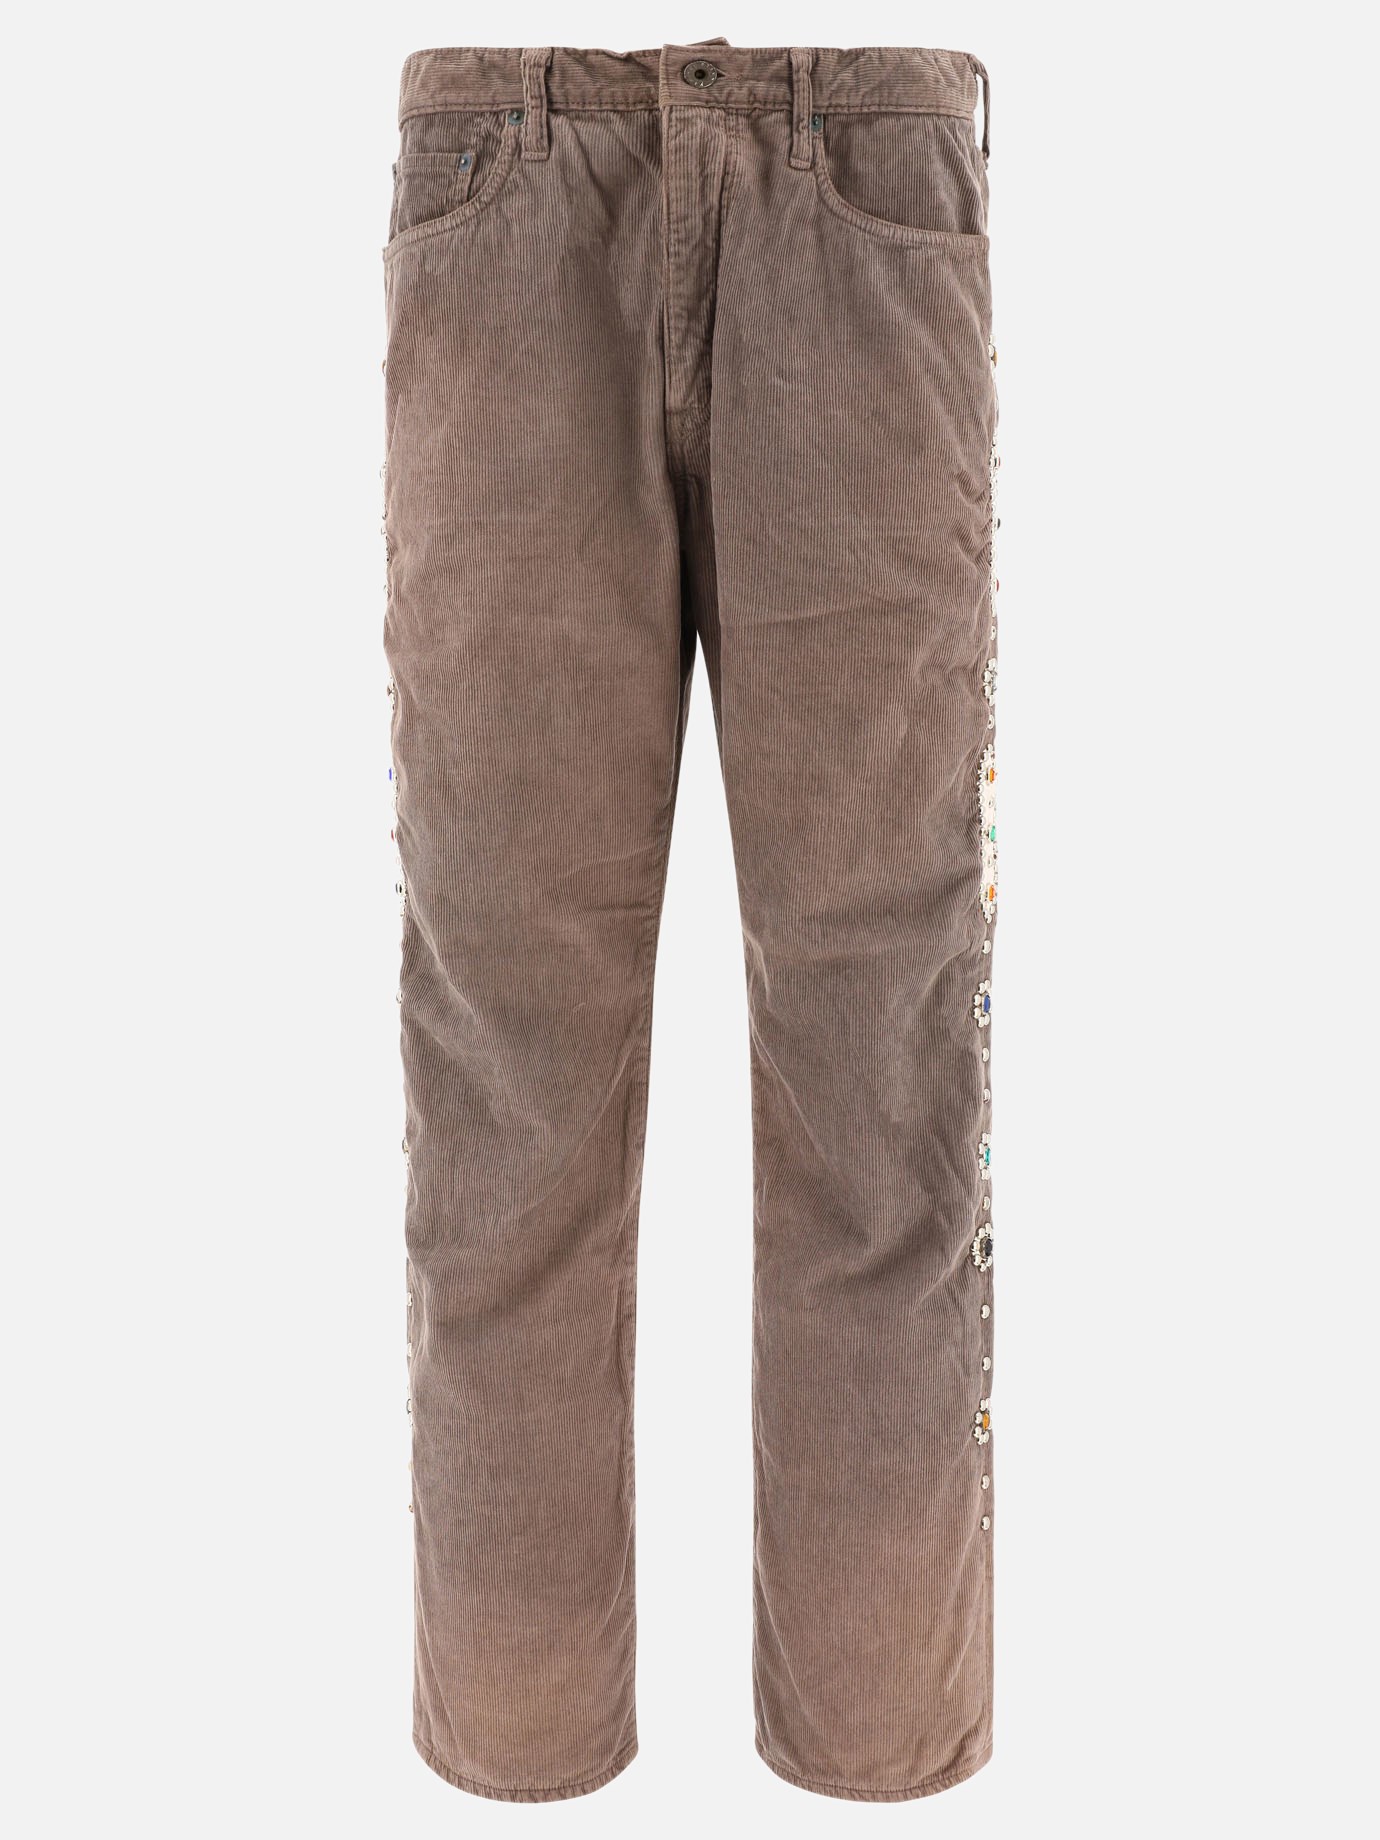 Corduroy trousers with rhinestonesby Kapital - 3